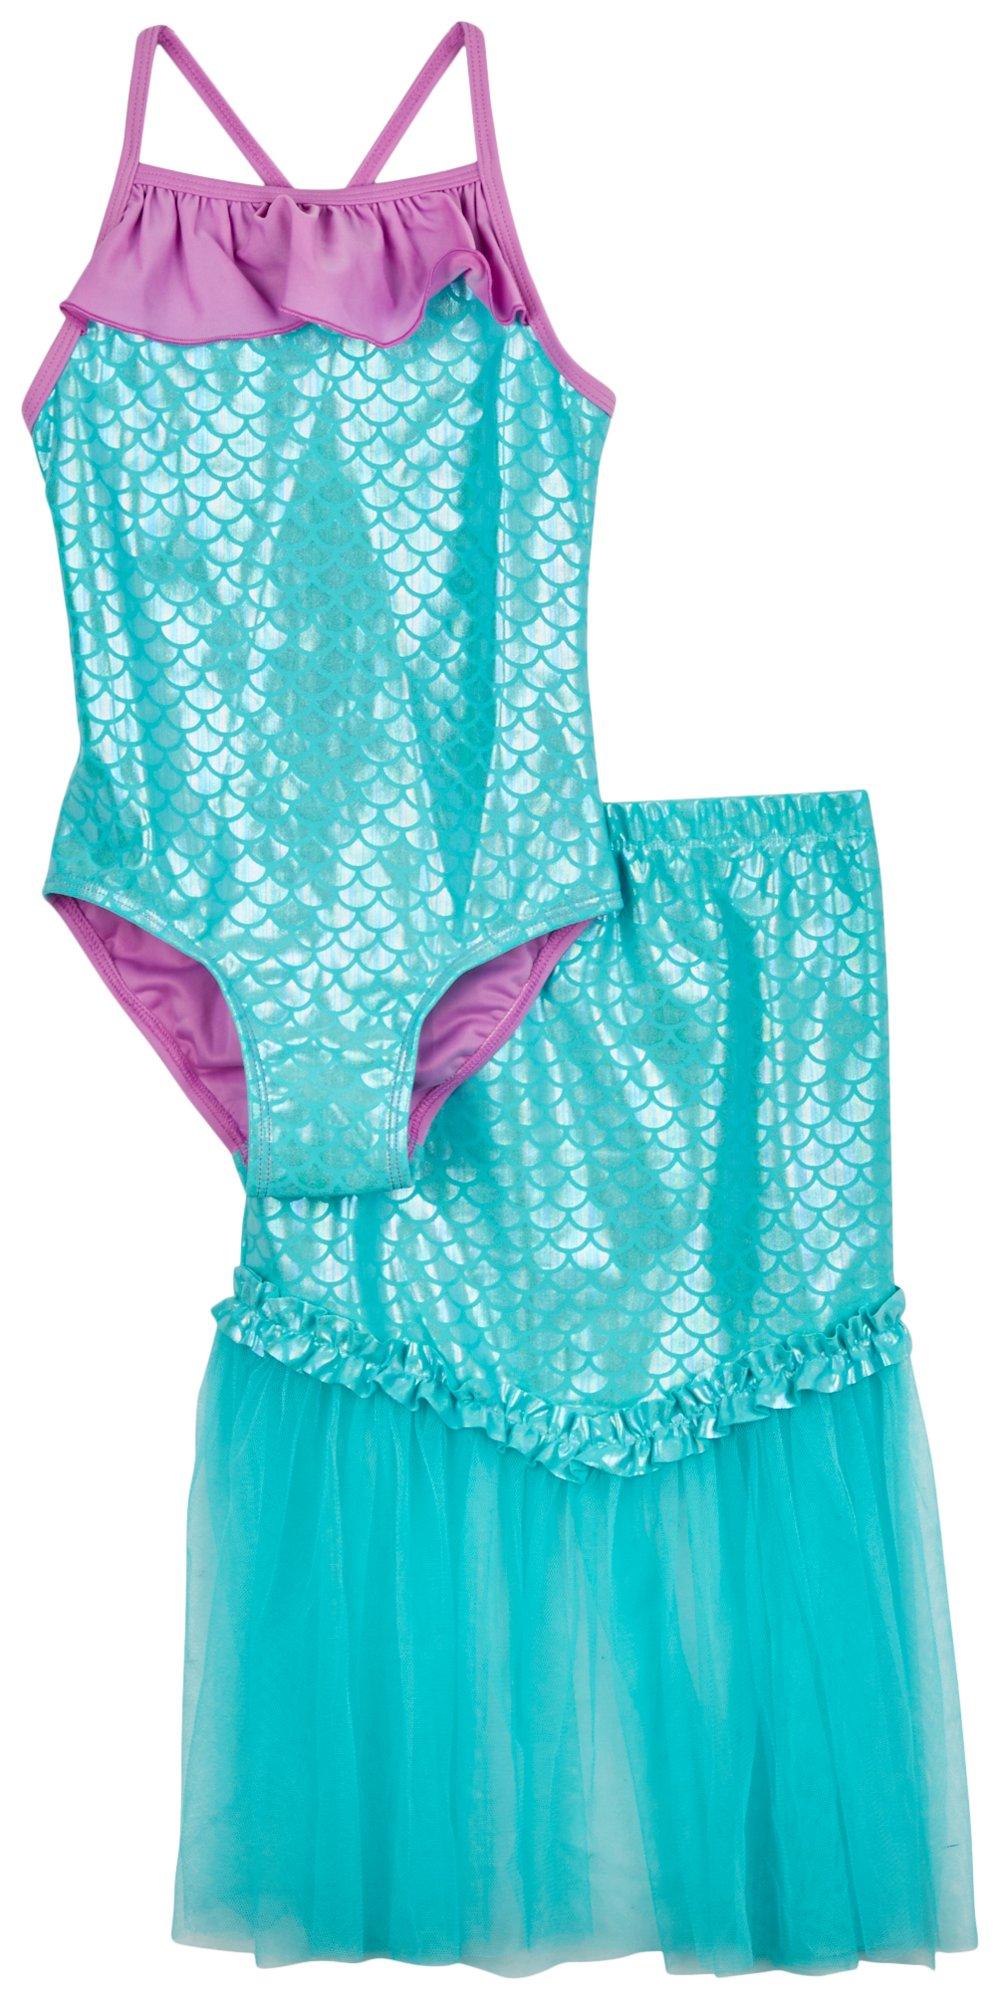 Floatimini Little Girls 2-Pc. Iridescent Foil Swimsuit Set